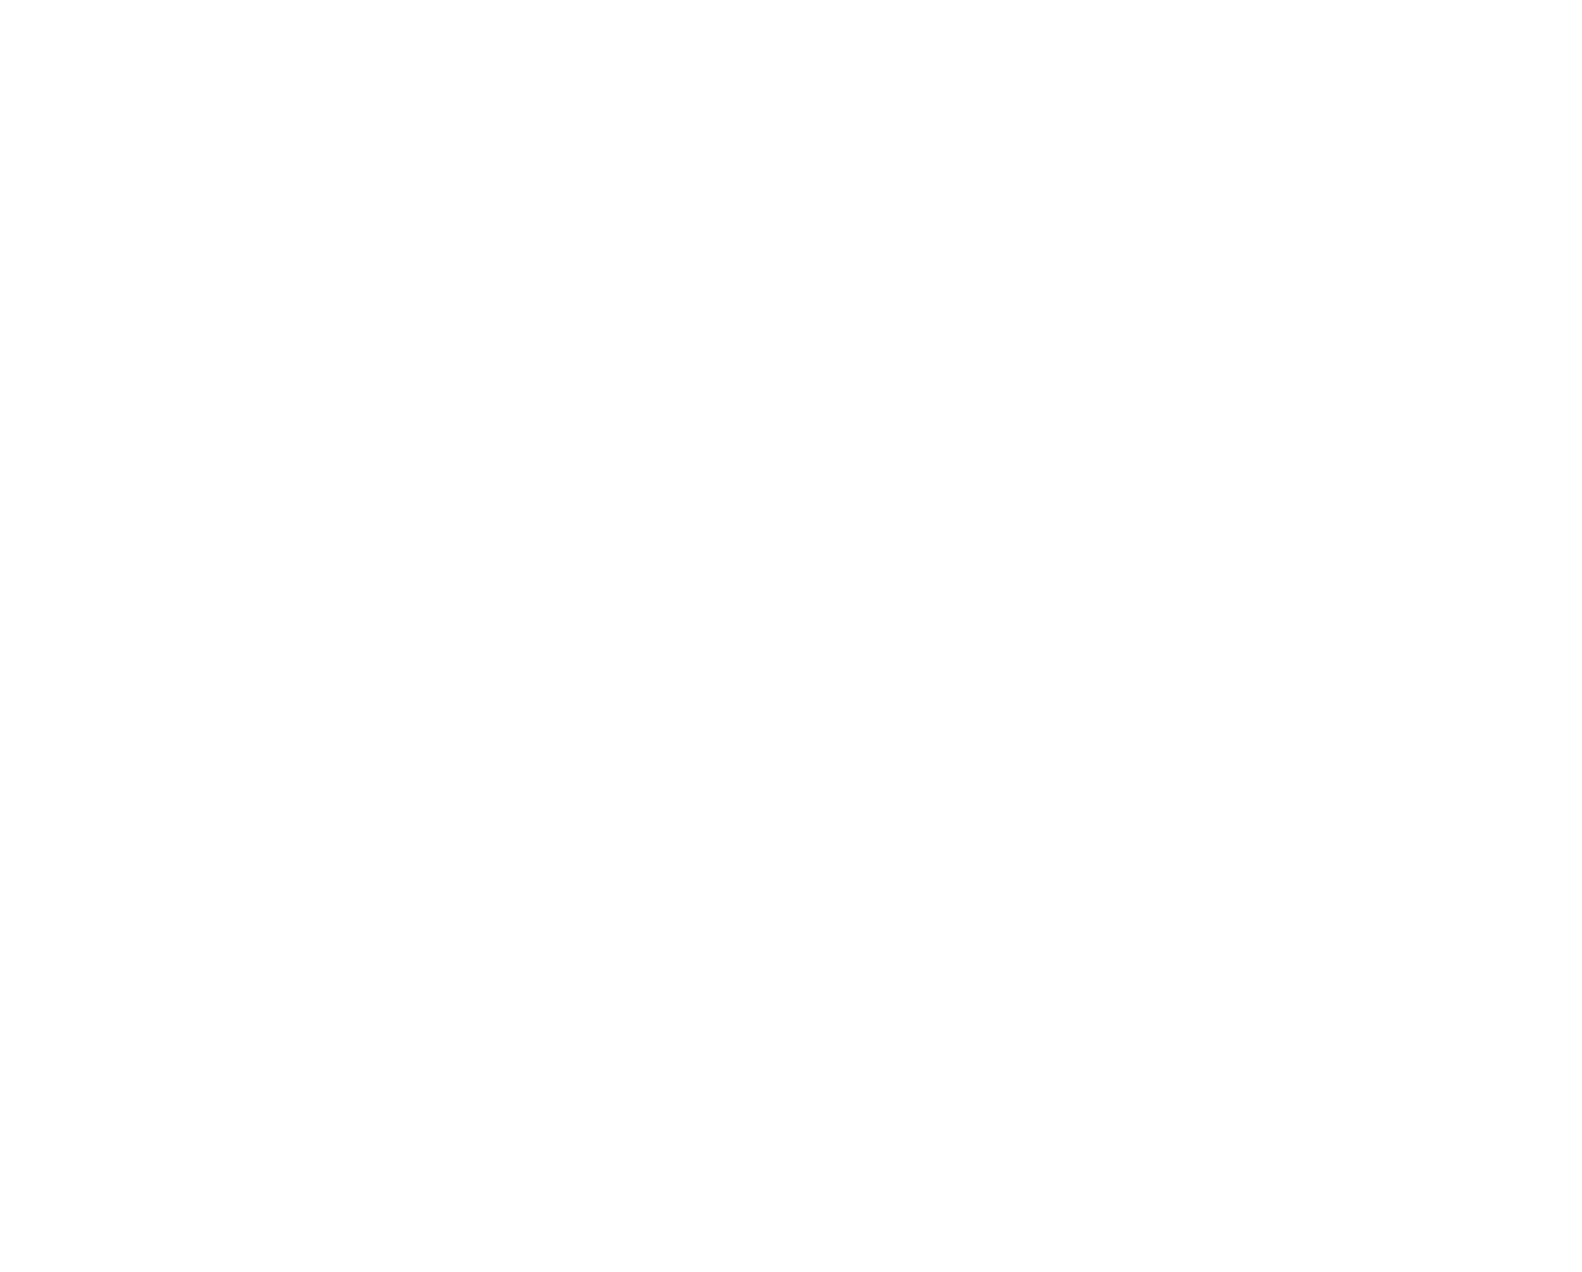 Squarespace logo for dark backgrounds (transparent PNG)